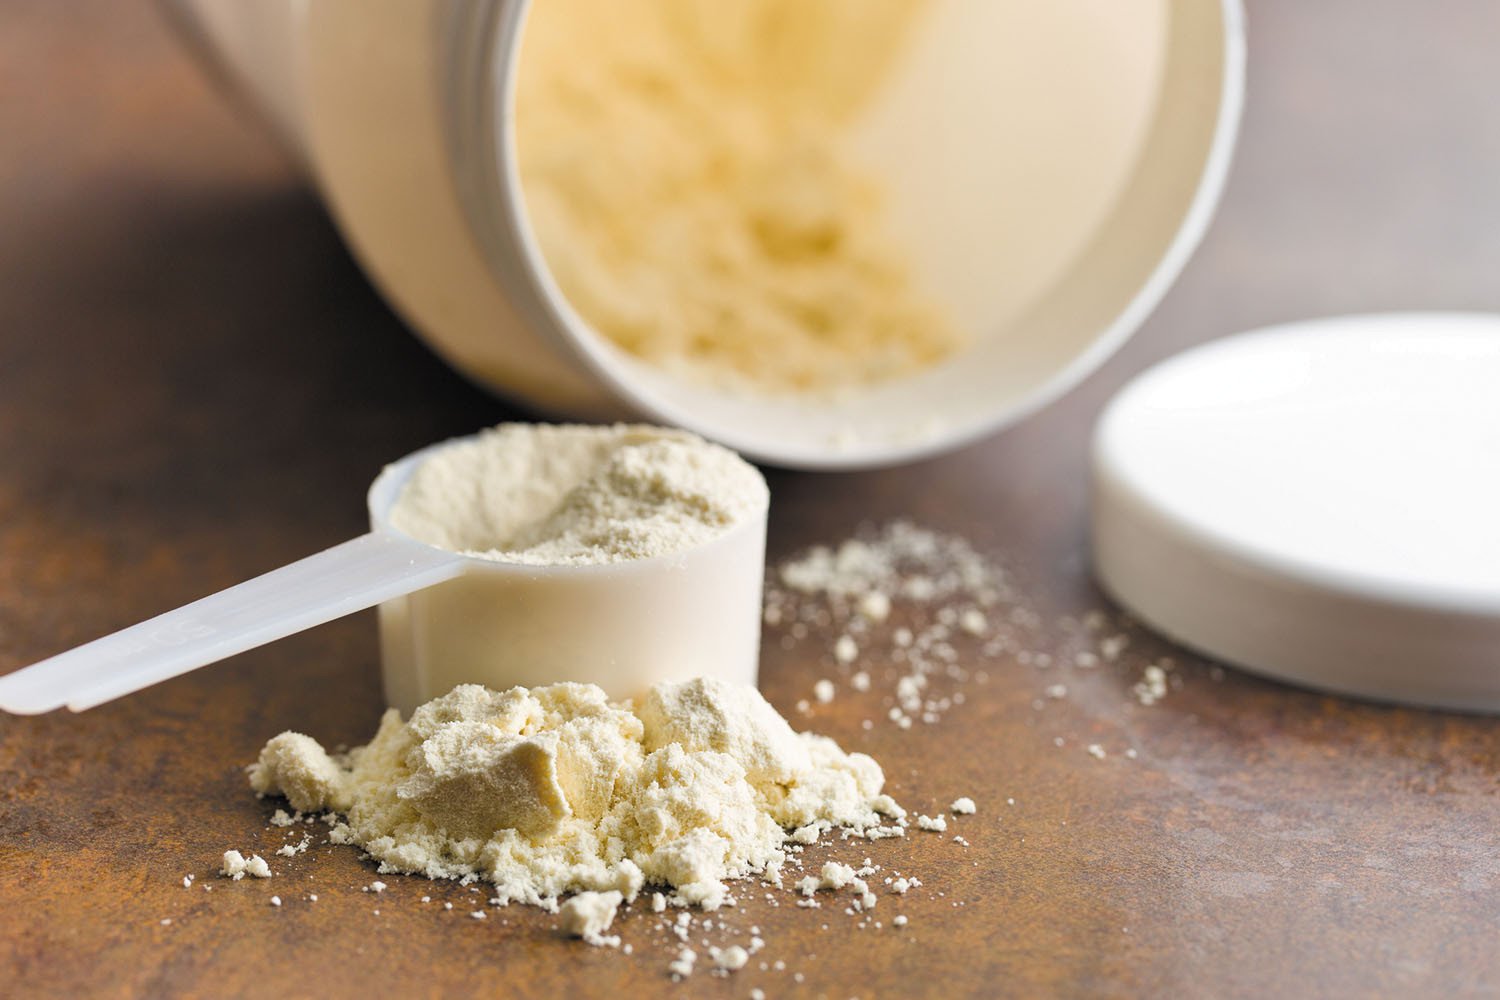 MuscleBlaze unveils new range of protein supplements